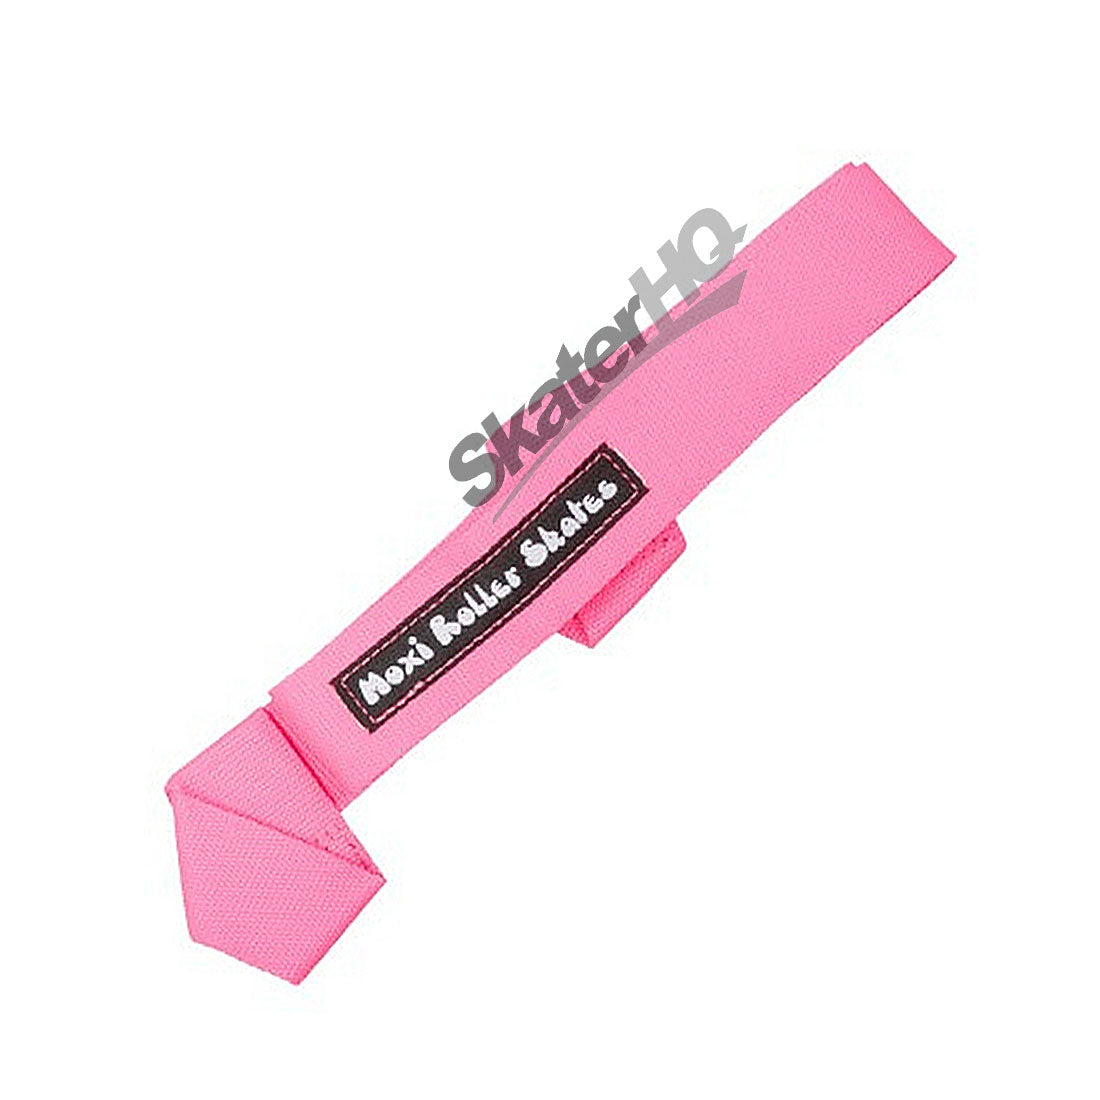 Moxi Skate Leash - Pink Roller Skate Accessories